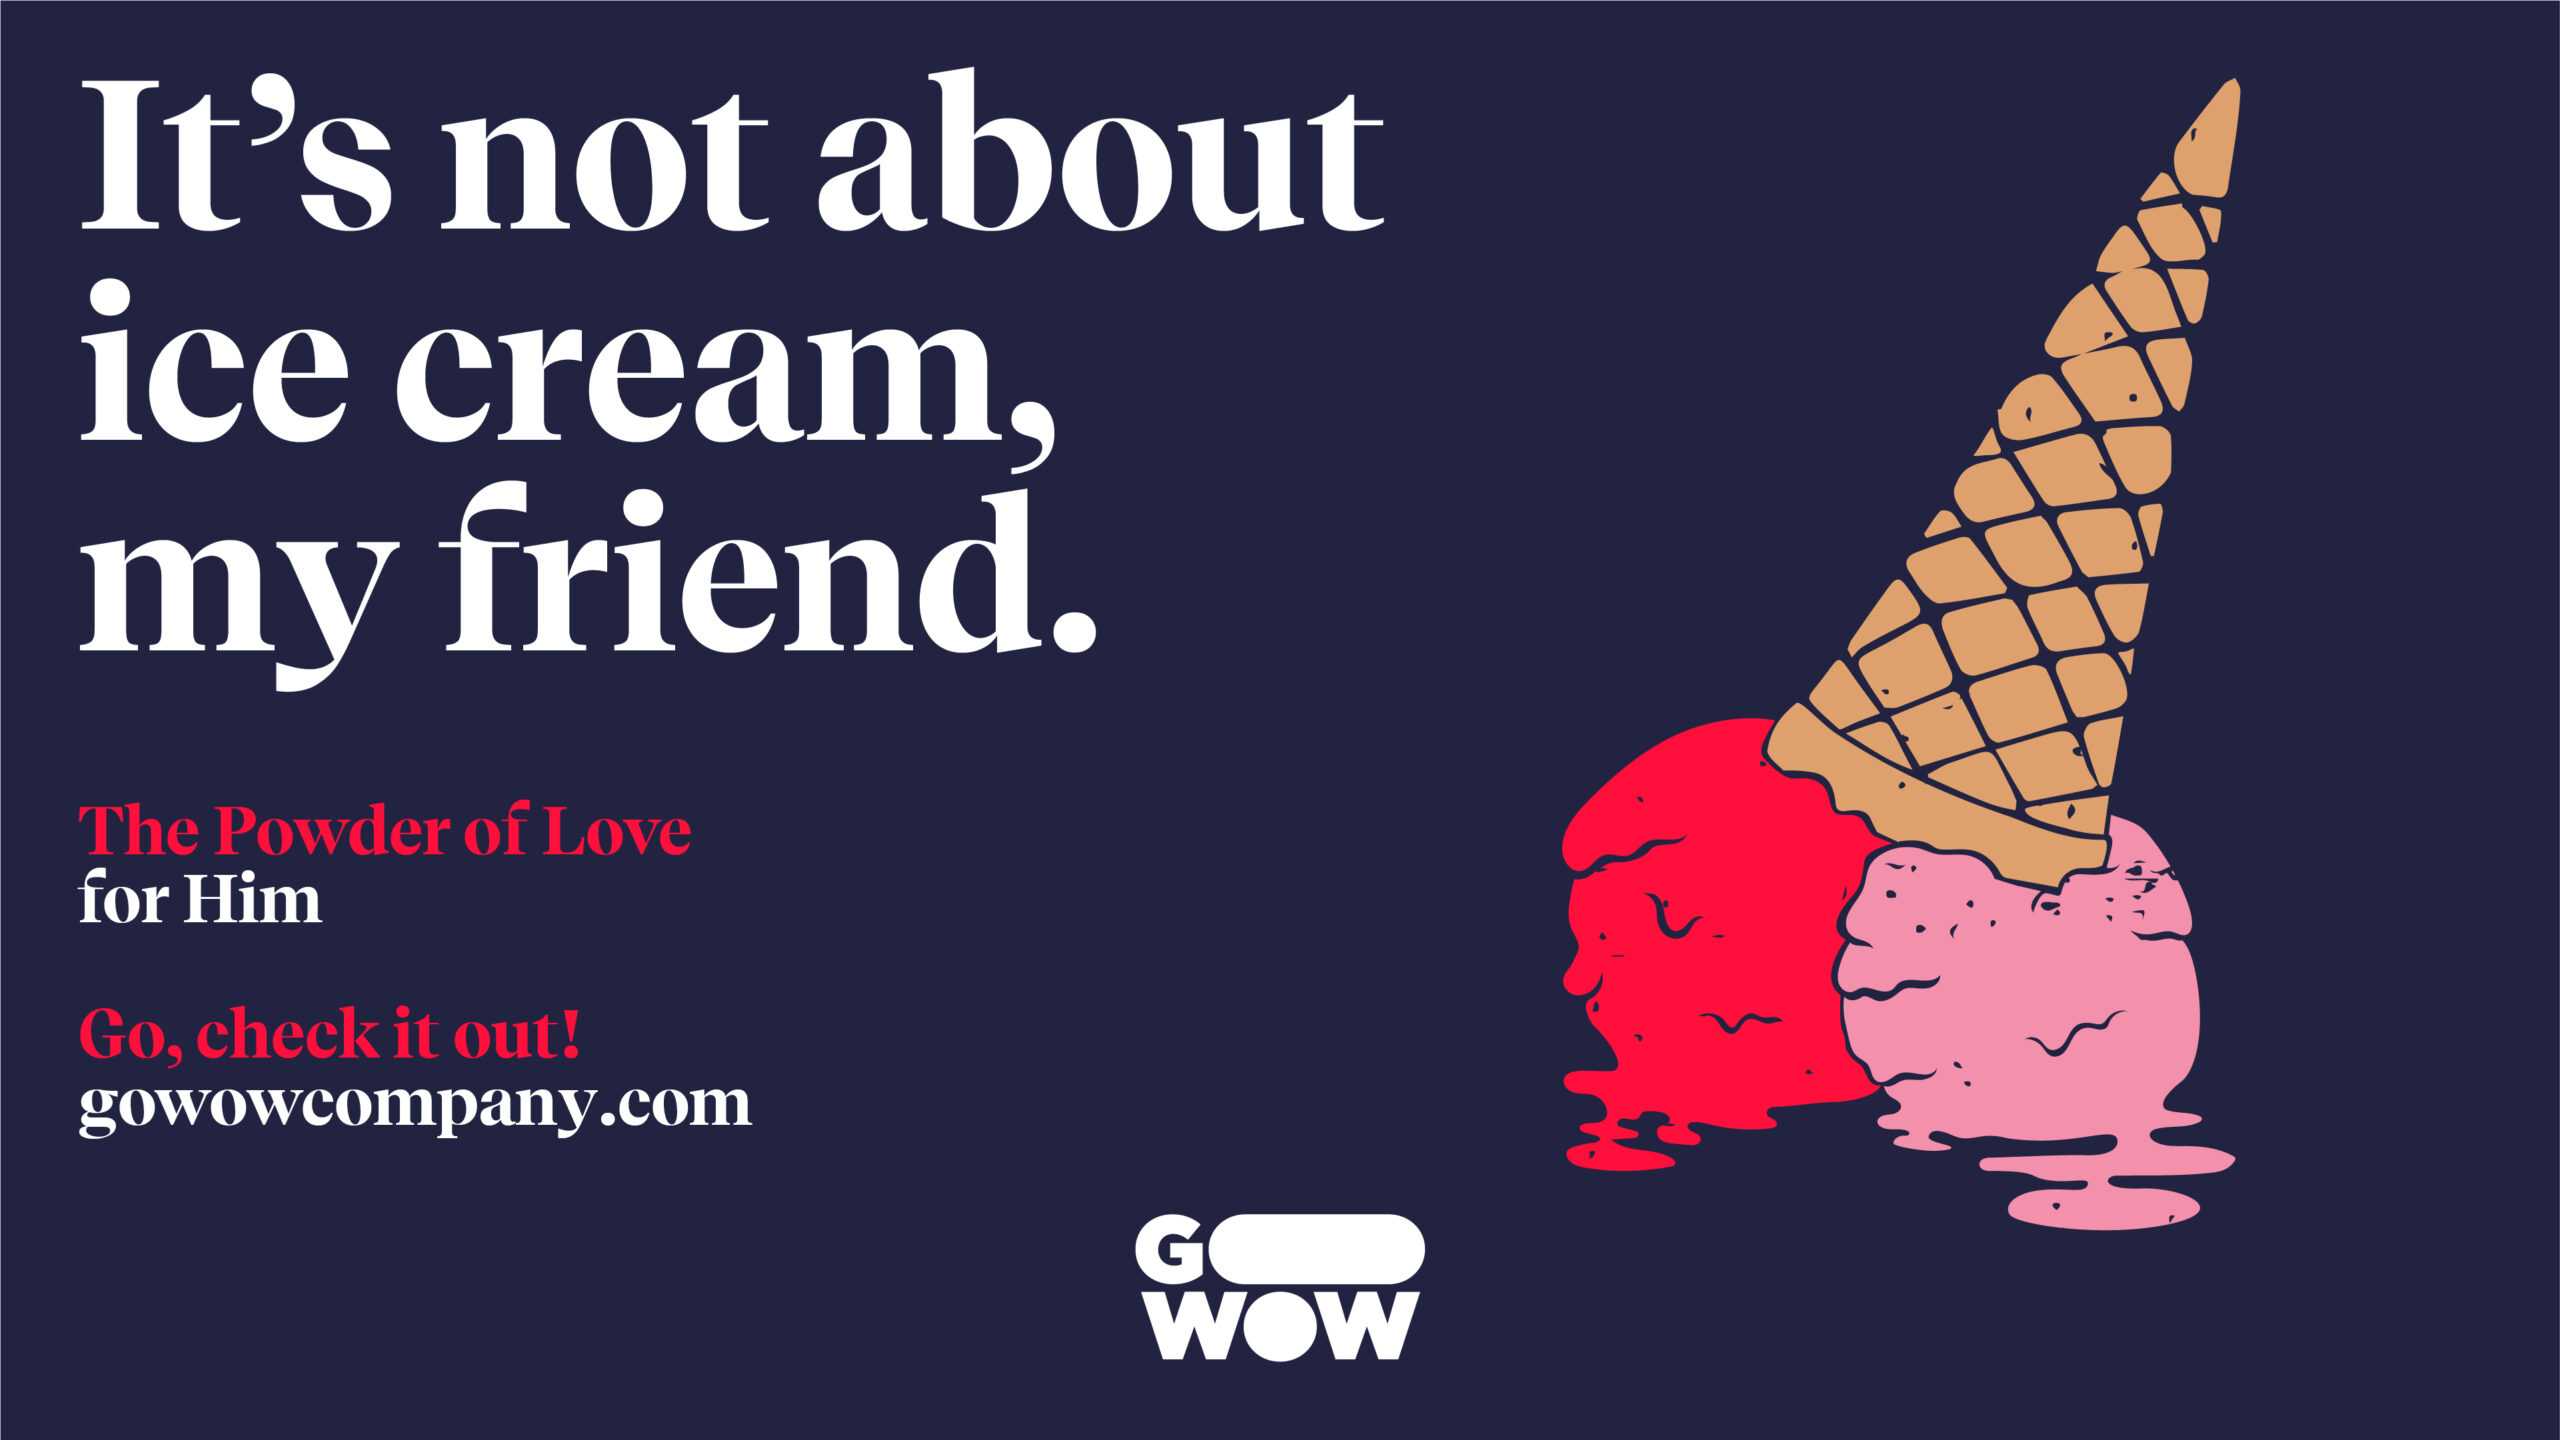 Ice cream cone illustration with Slogan